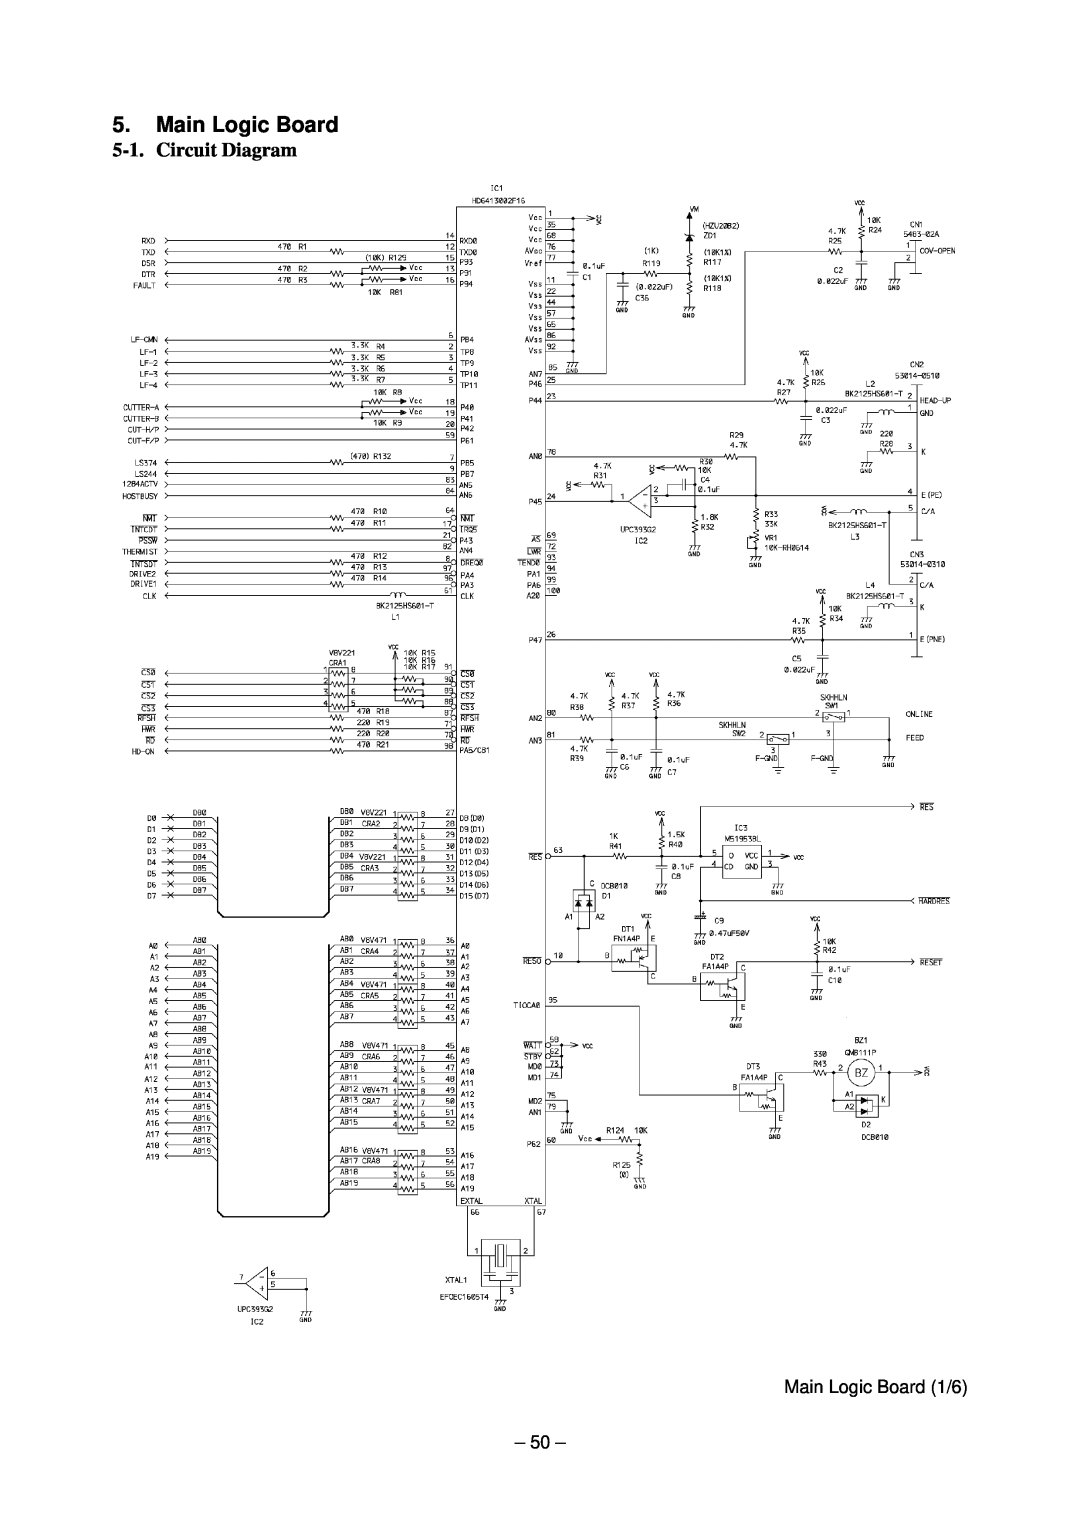 Star Micronics TSP200 technical manual Circuit Diagram, Main Logic Board 1/6 